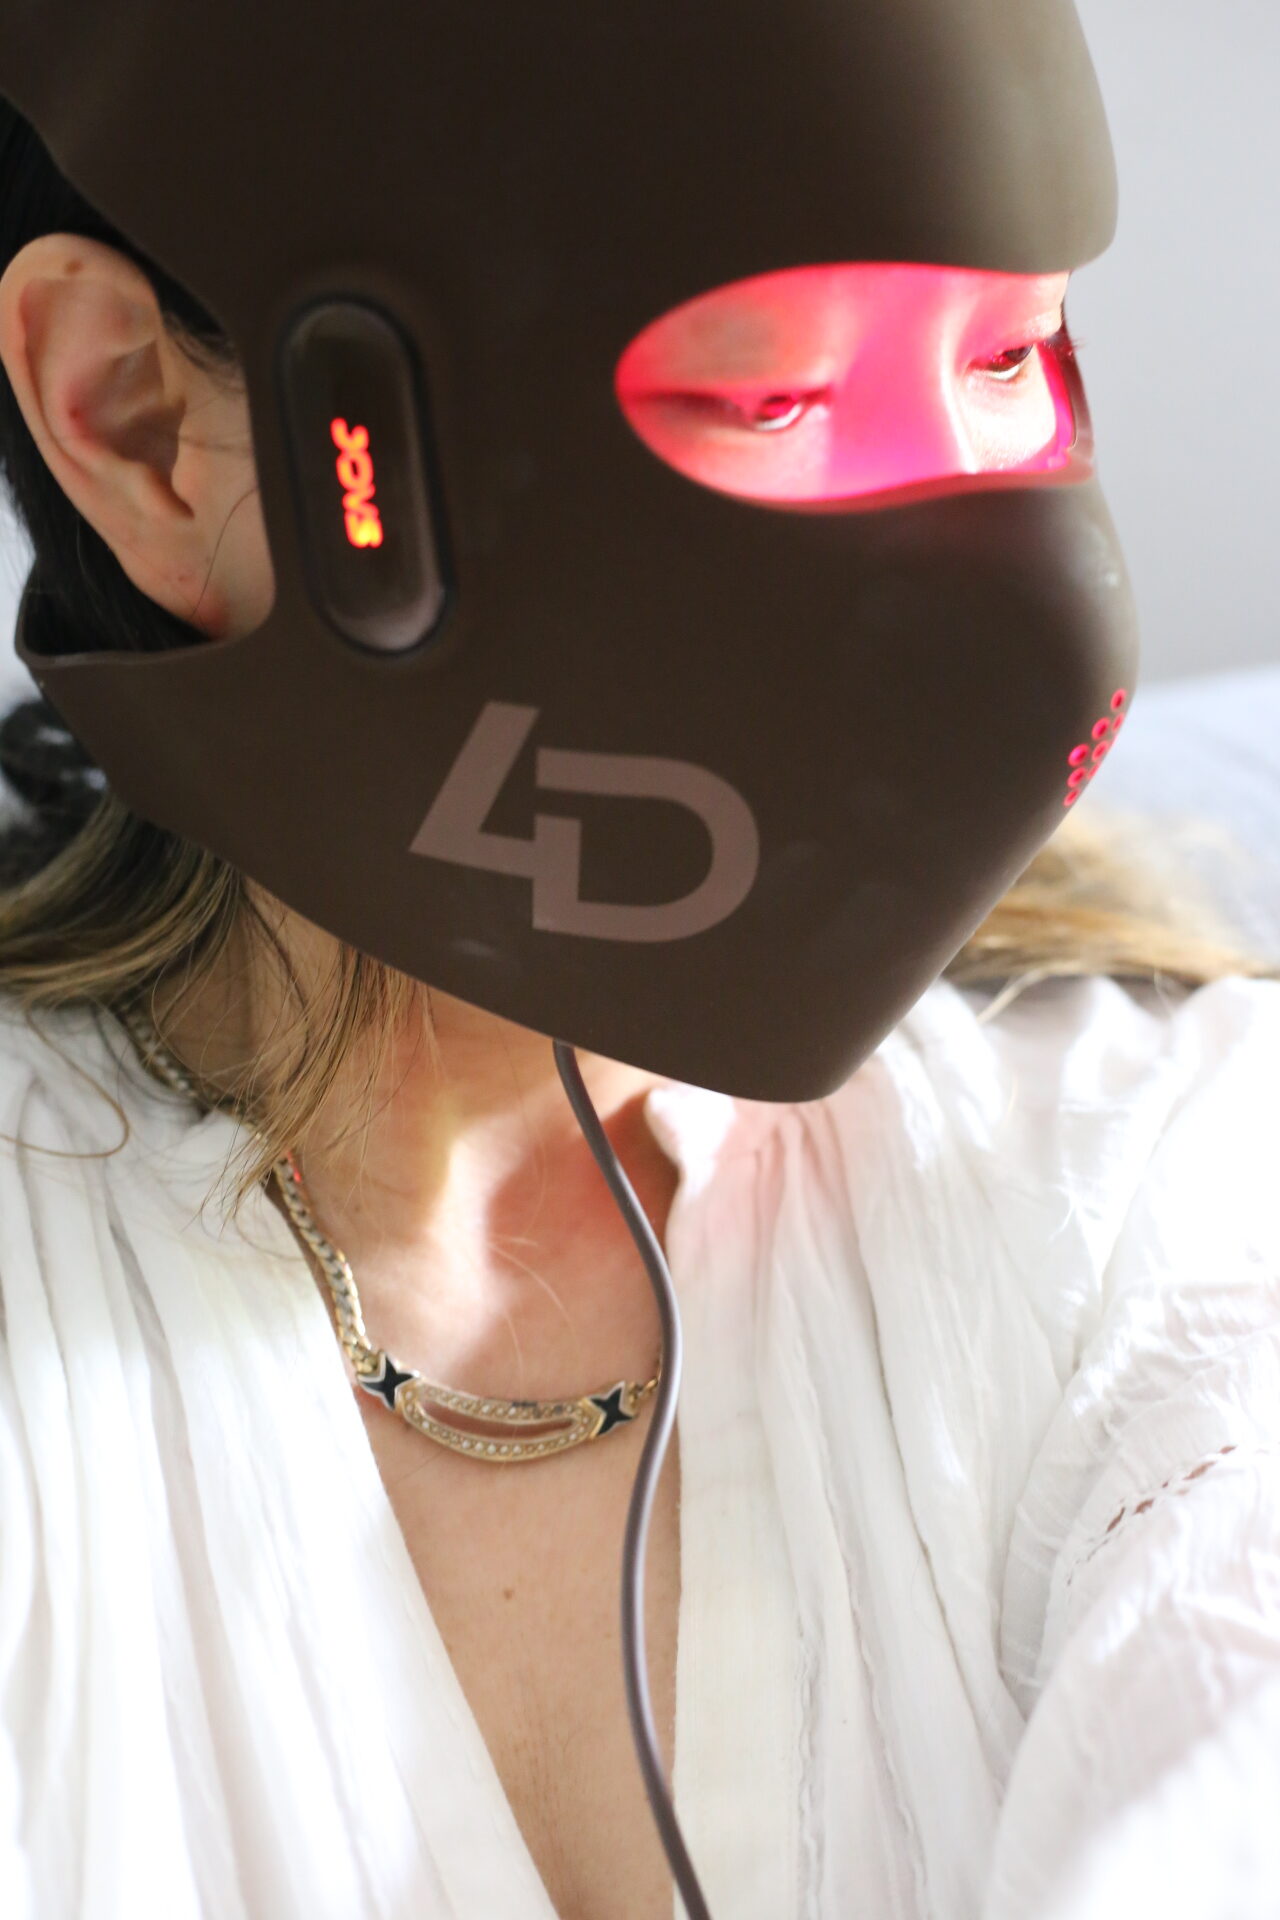 JOVS 4D Laser Light Therapy Mask